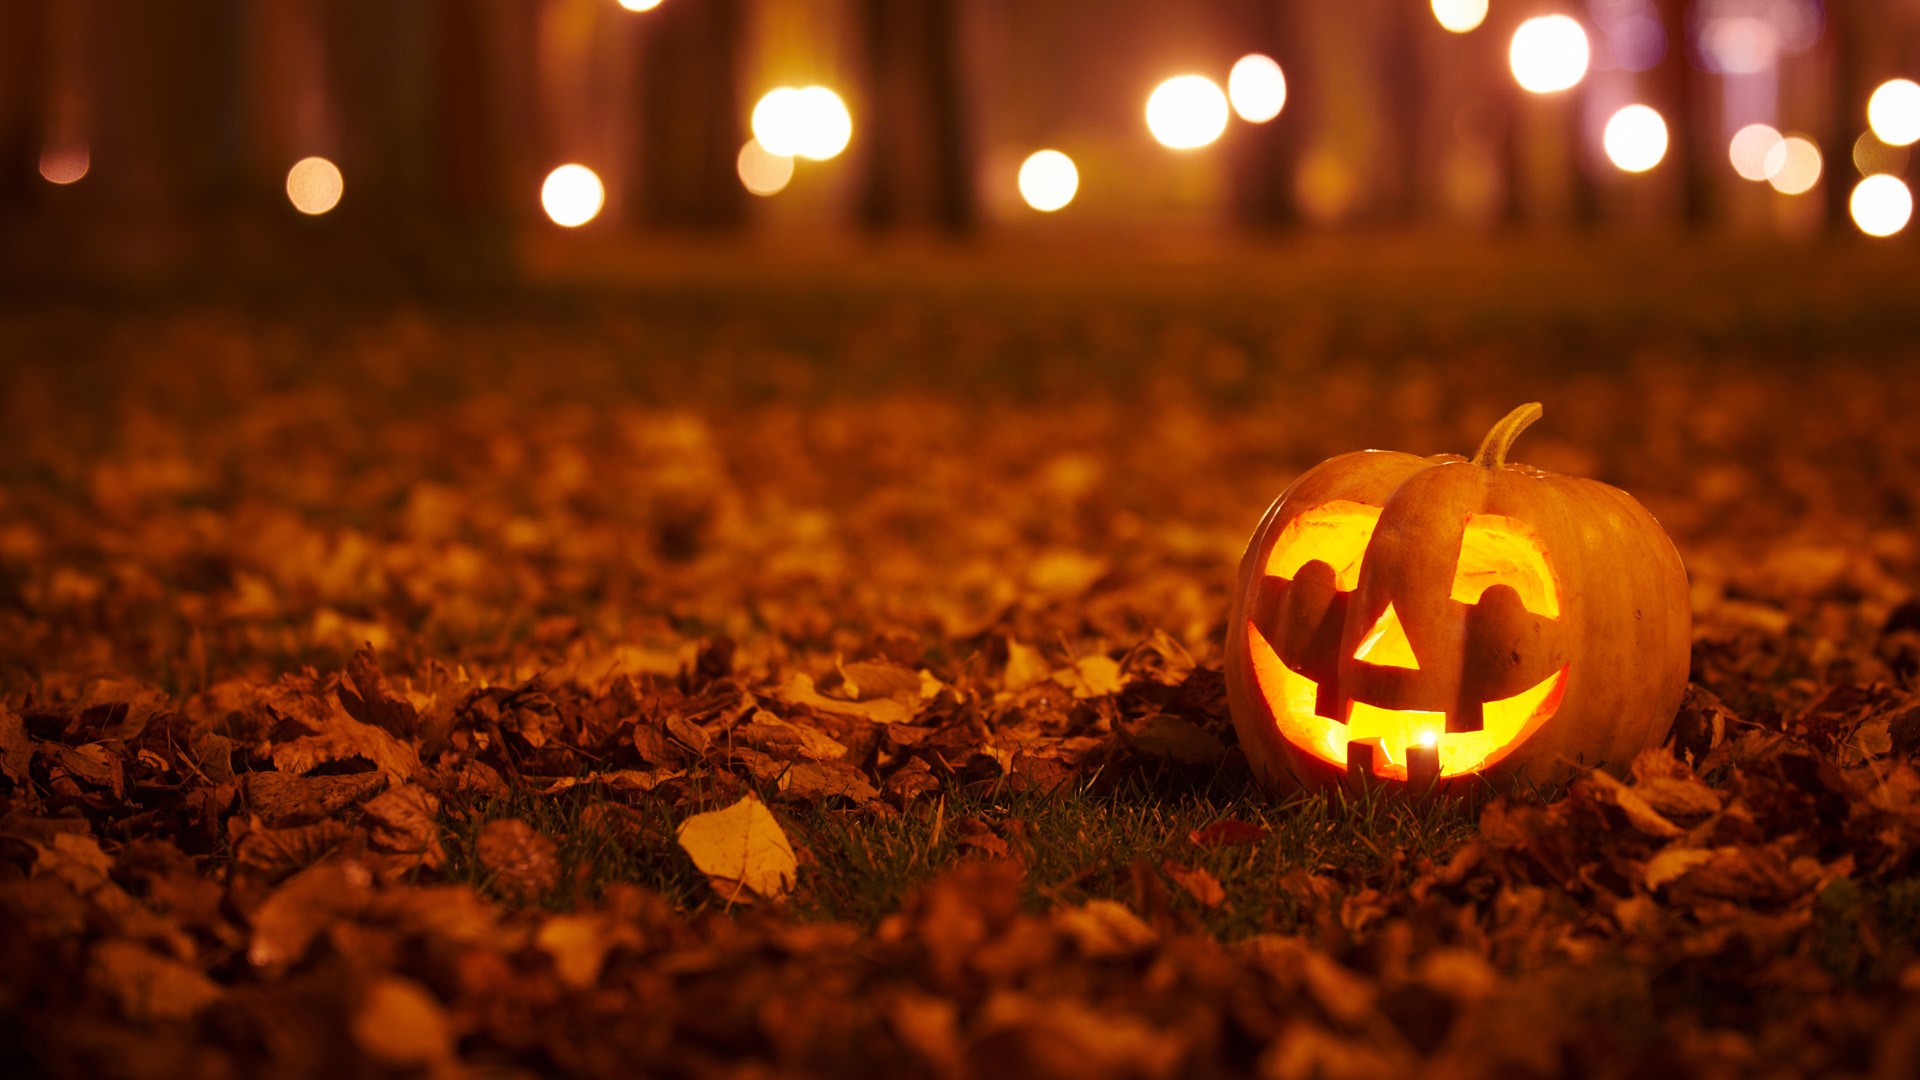 Jack-o'-lantern carved from pumpkin | Windows 10 Spotlight Images